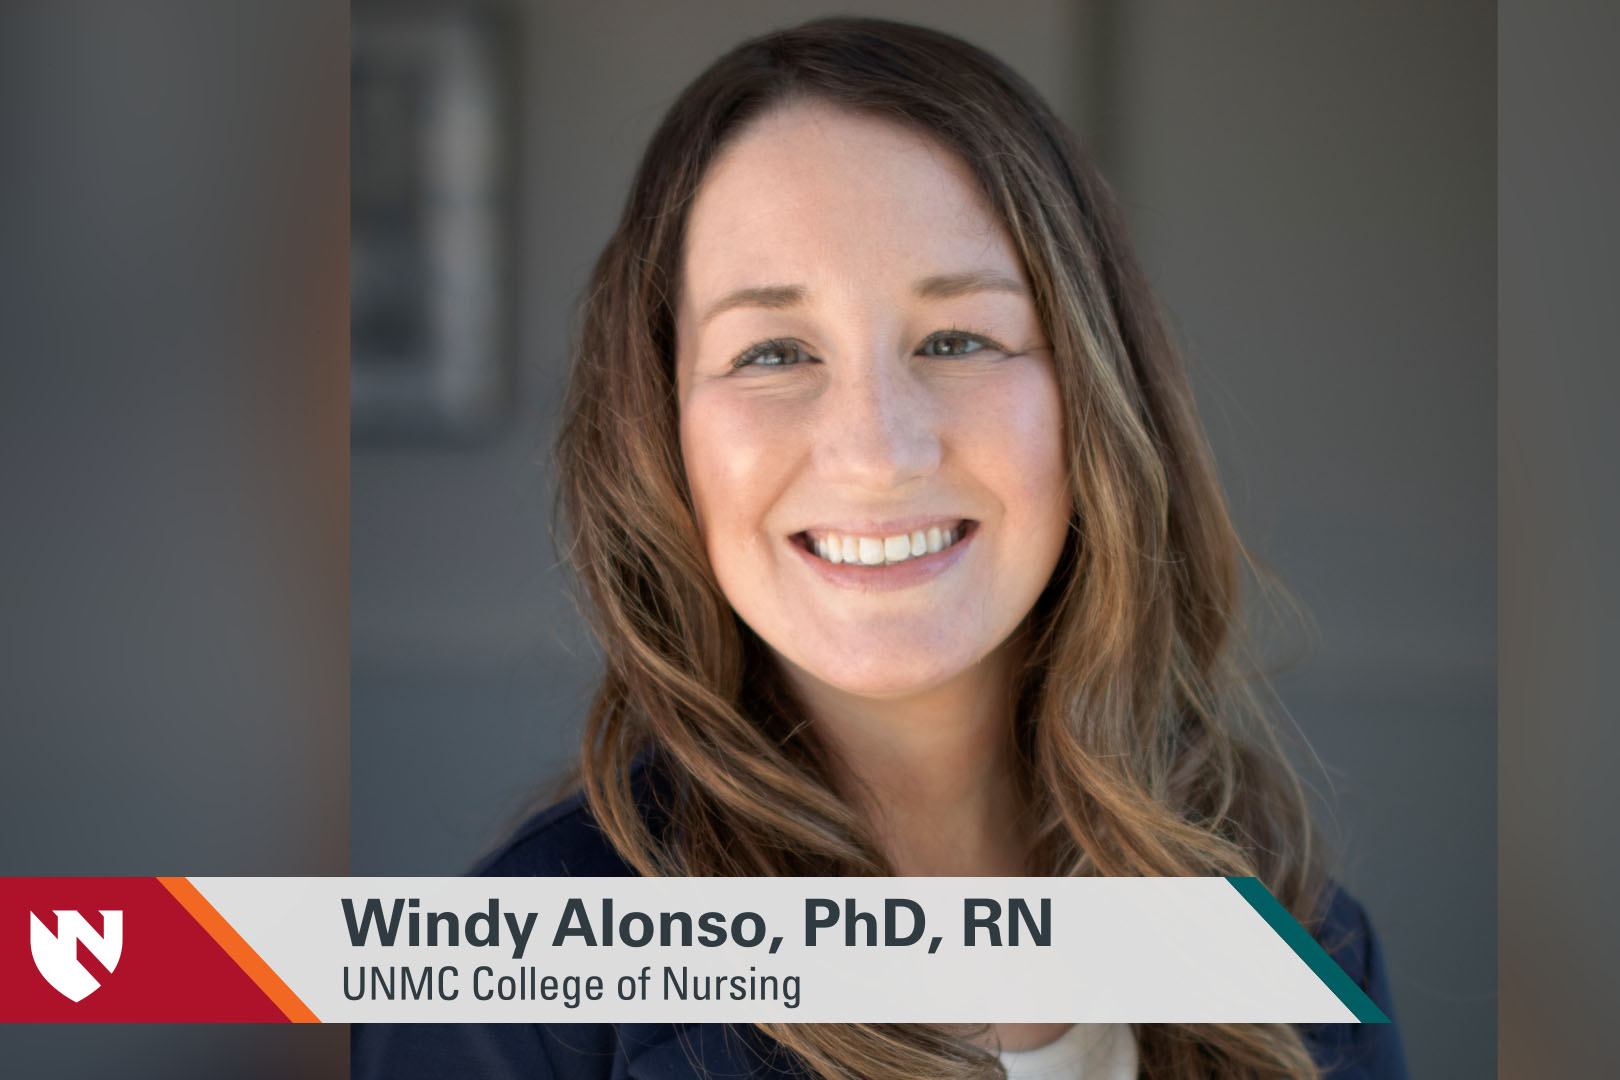 ASK UNMC! Windy Alonso, PhD, UNMC College of Nursing